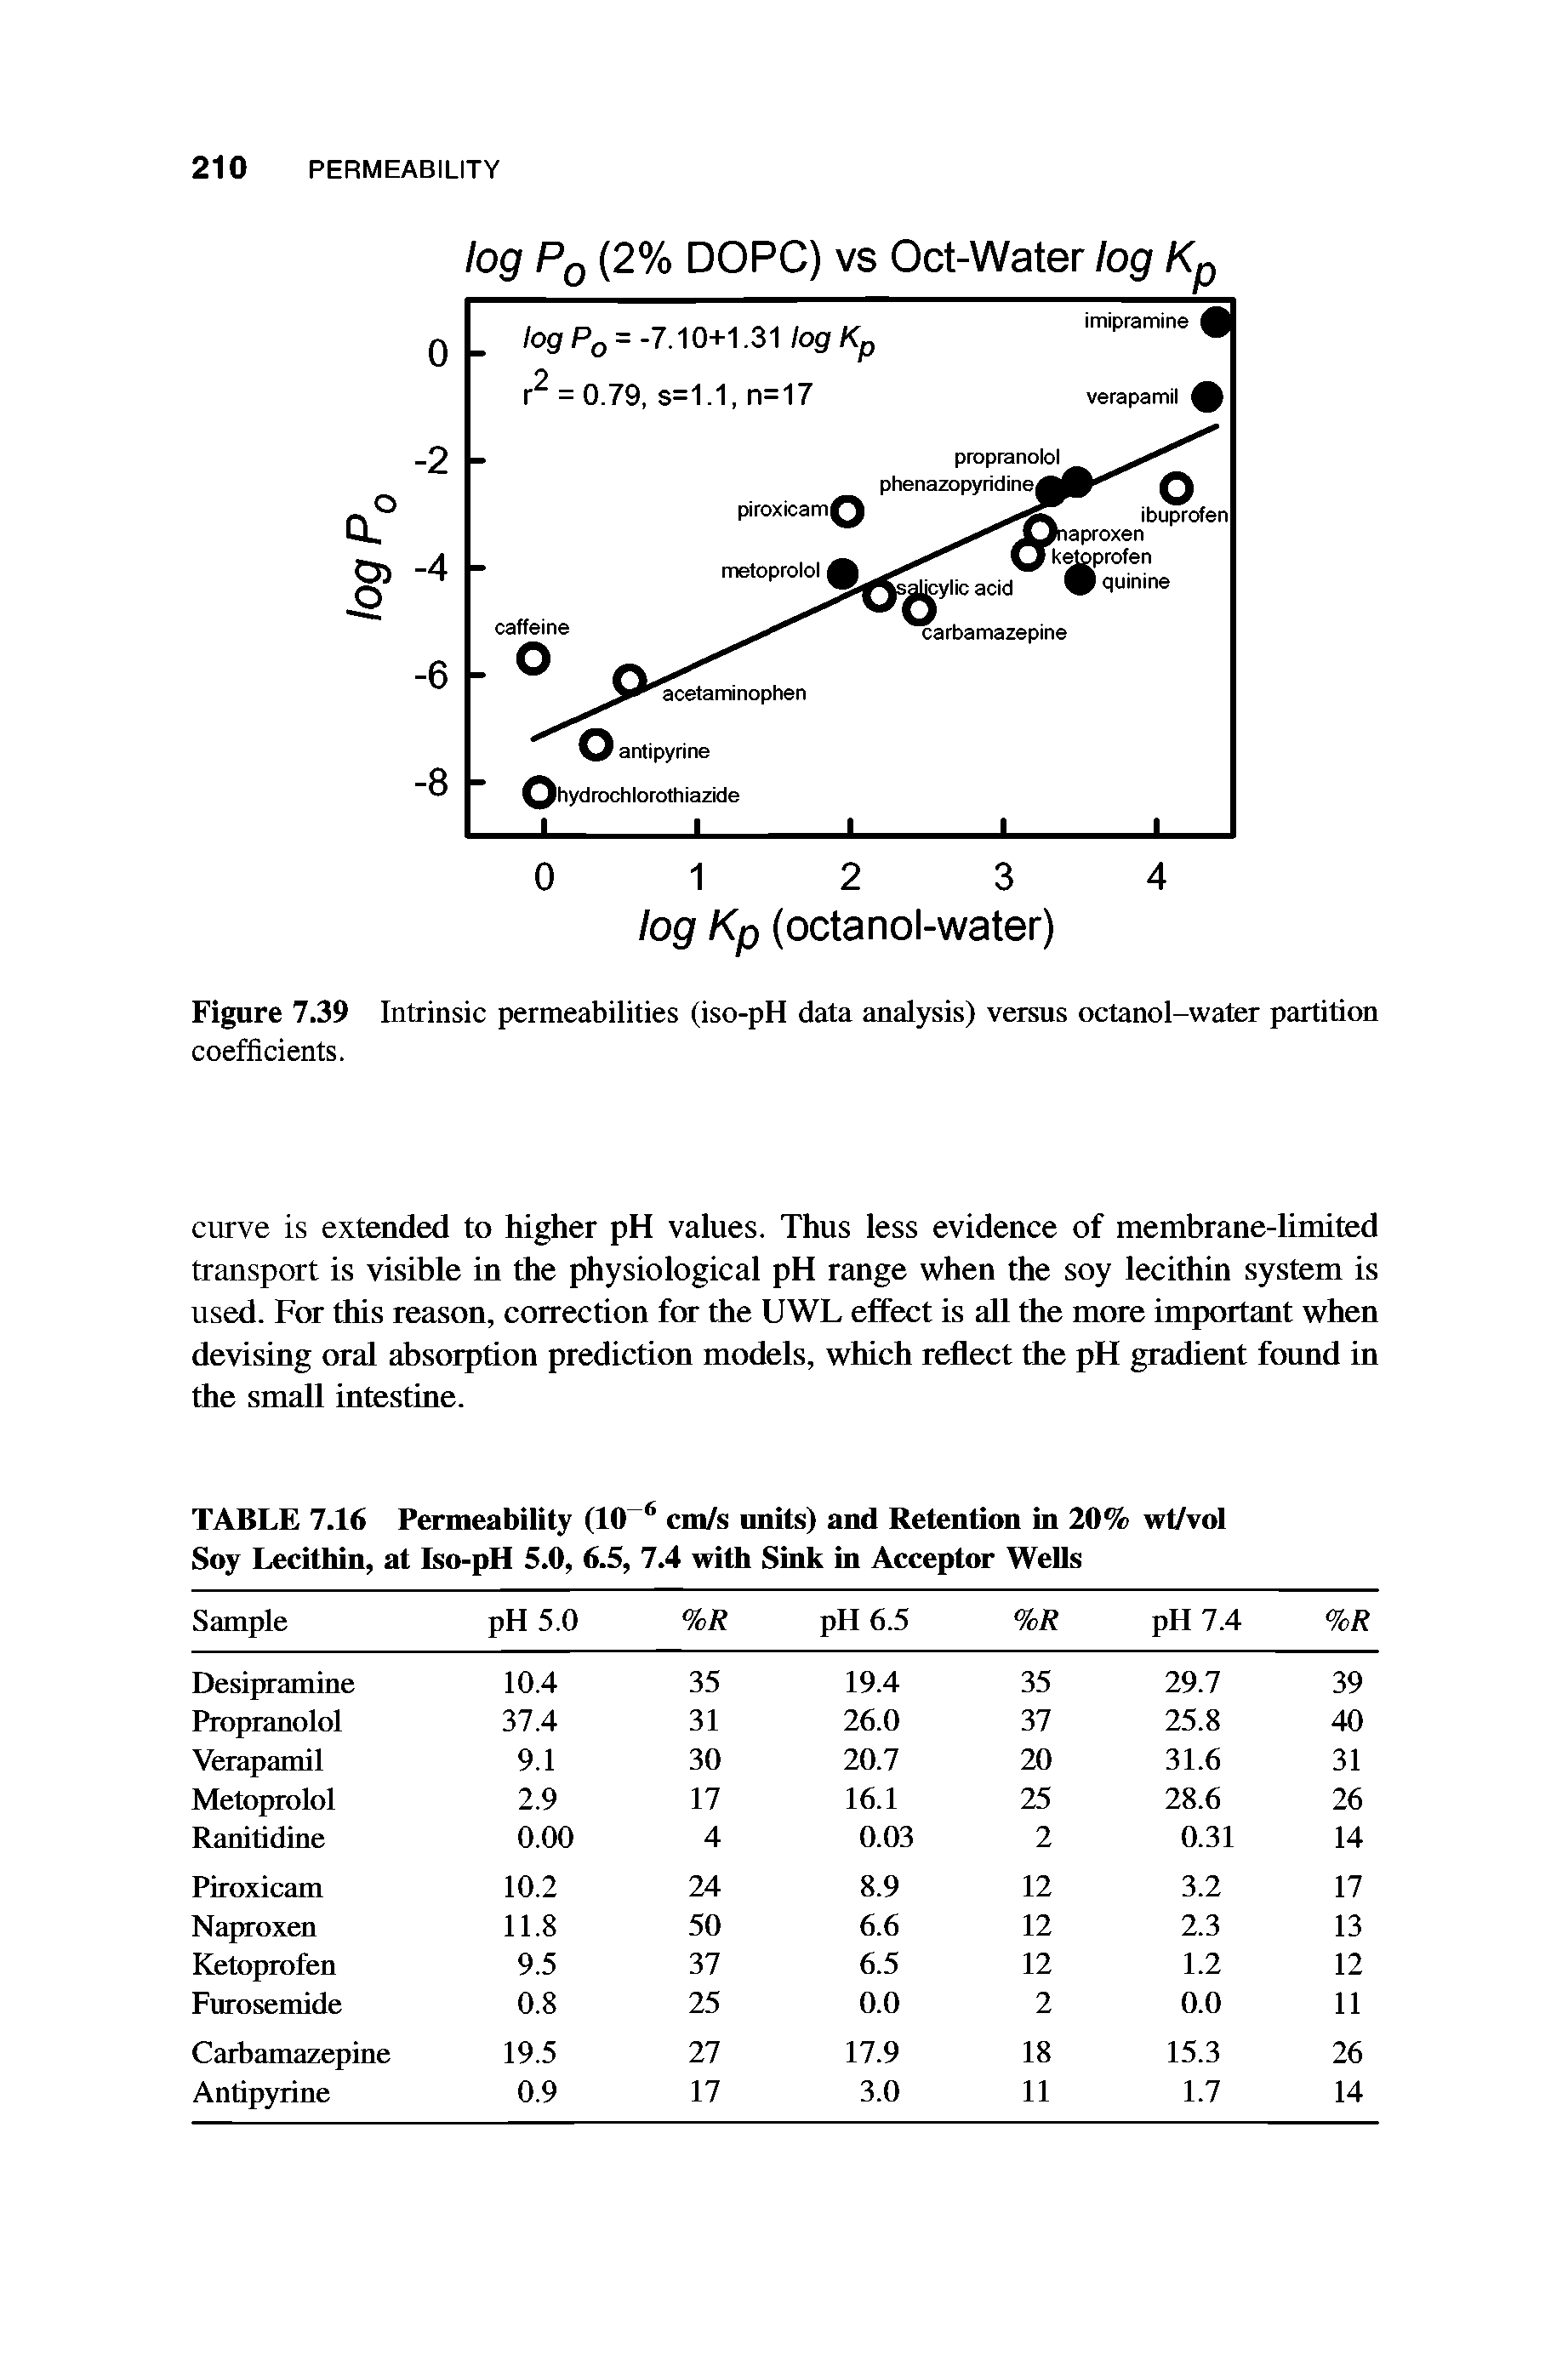 Figure 7.39 Intrinsic permeabilities (iso-pH data analysis) versus octanol-water partition coefficients.